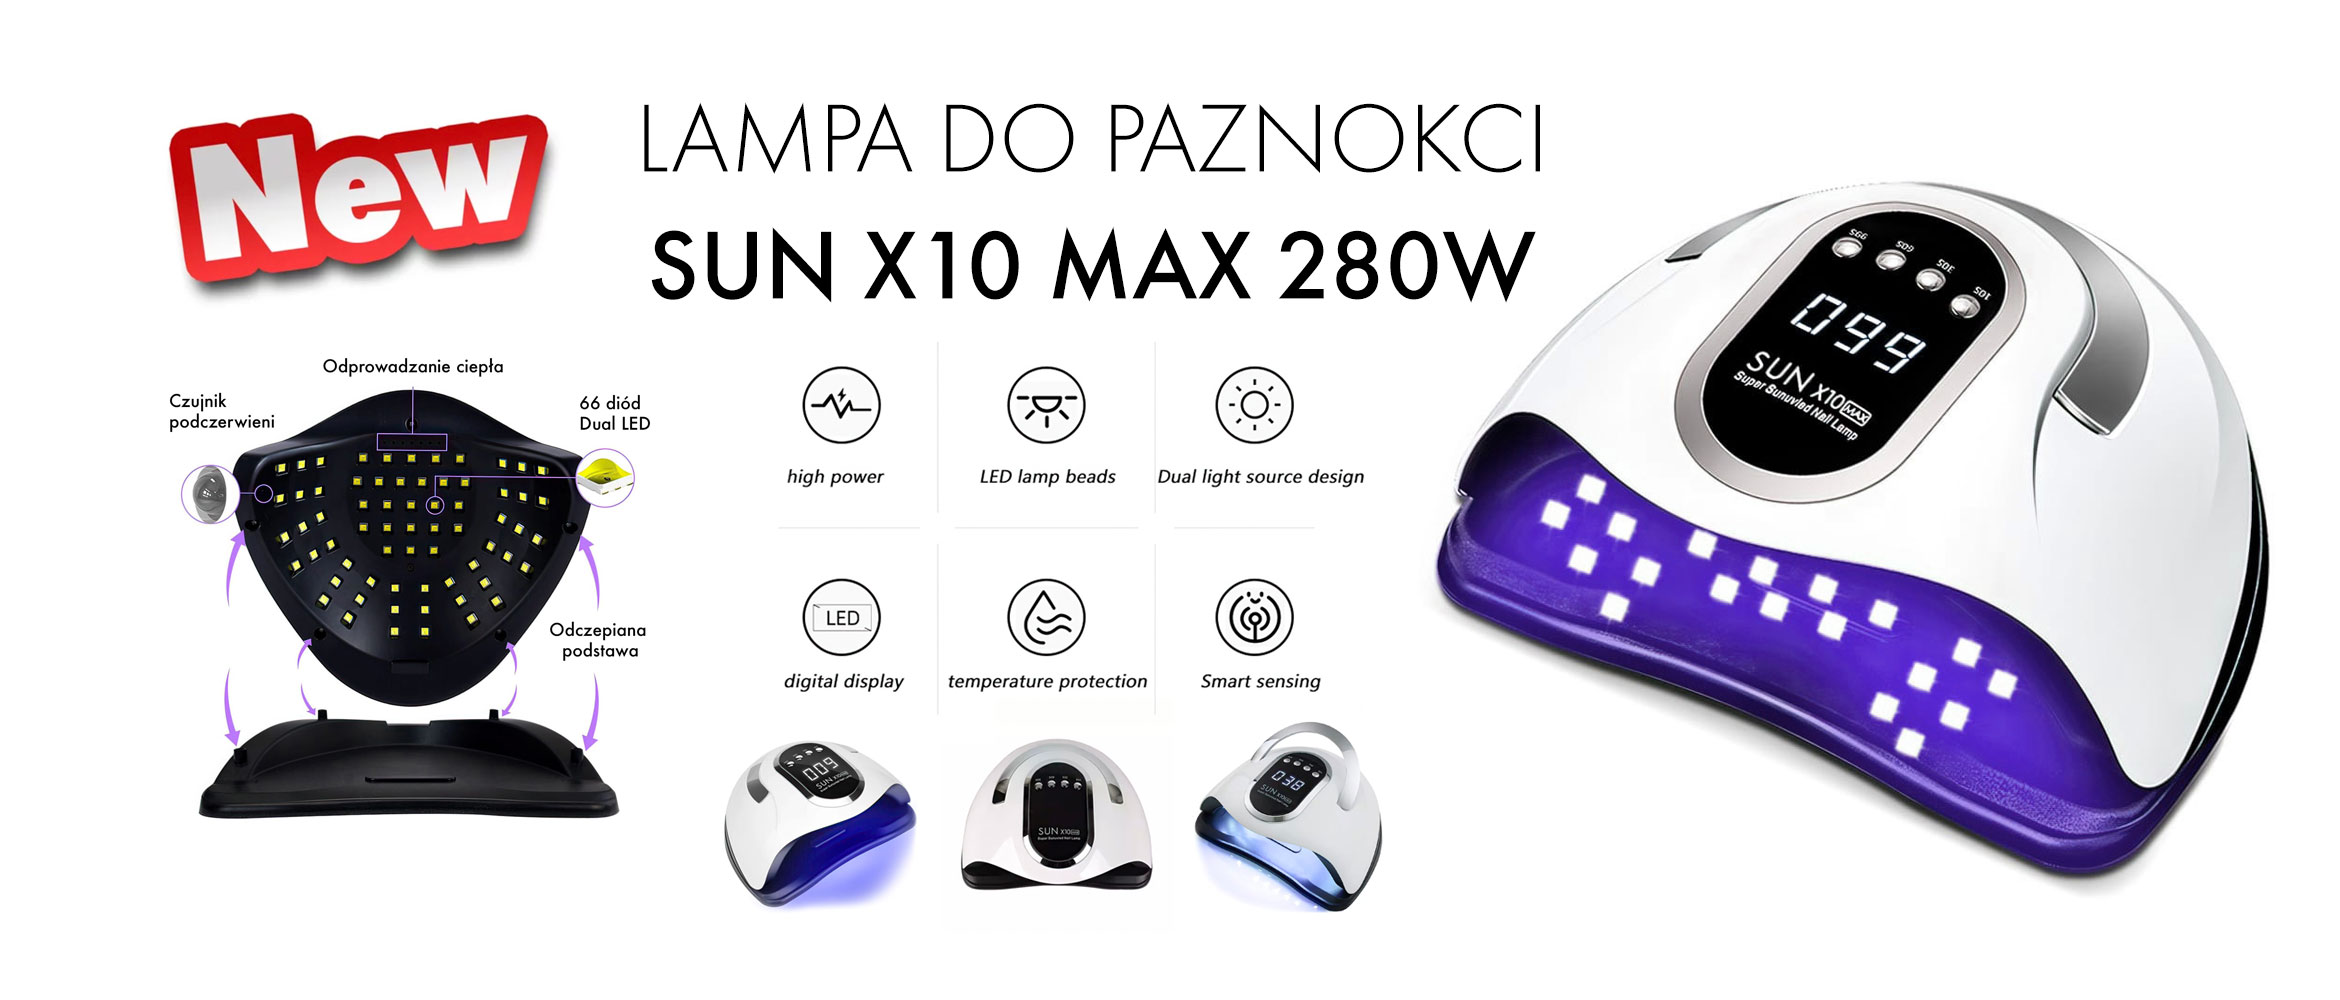 LAMPA DO PAZNOKCI SUN X10 MAX 280W